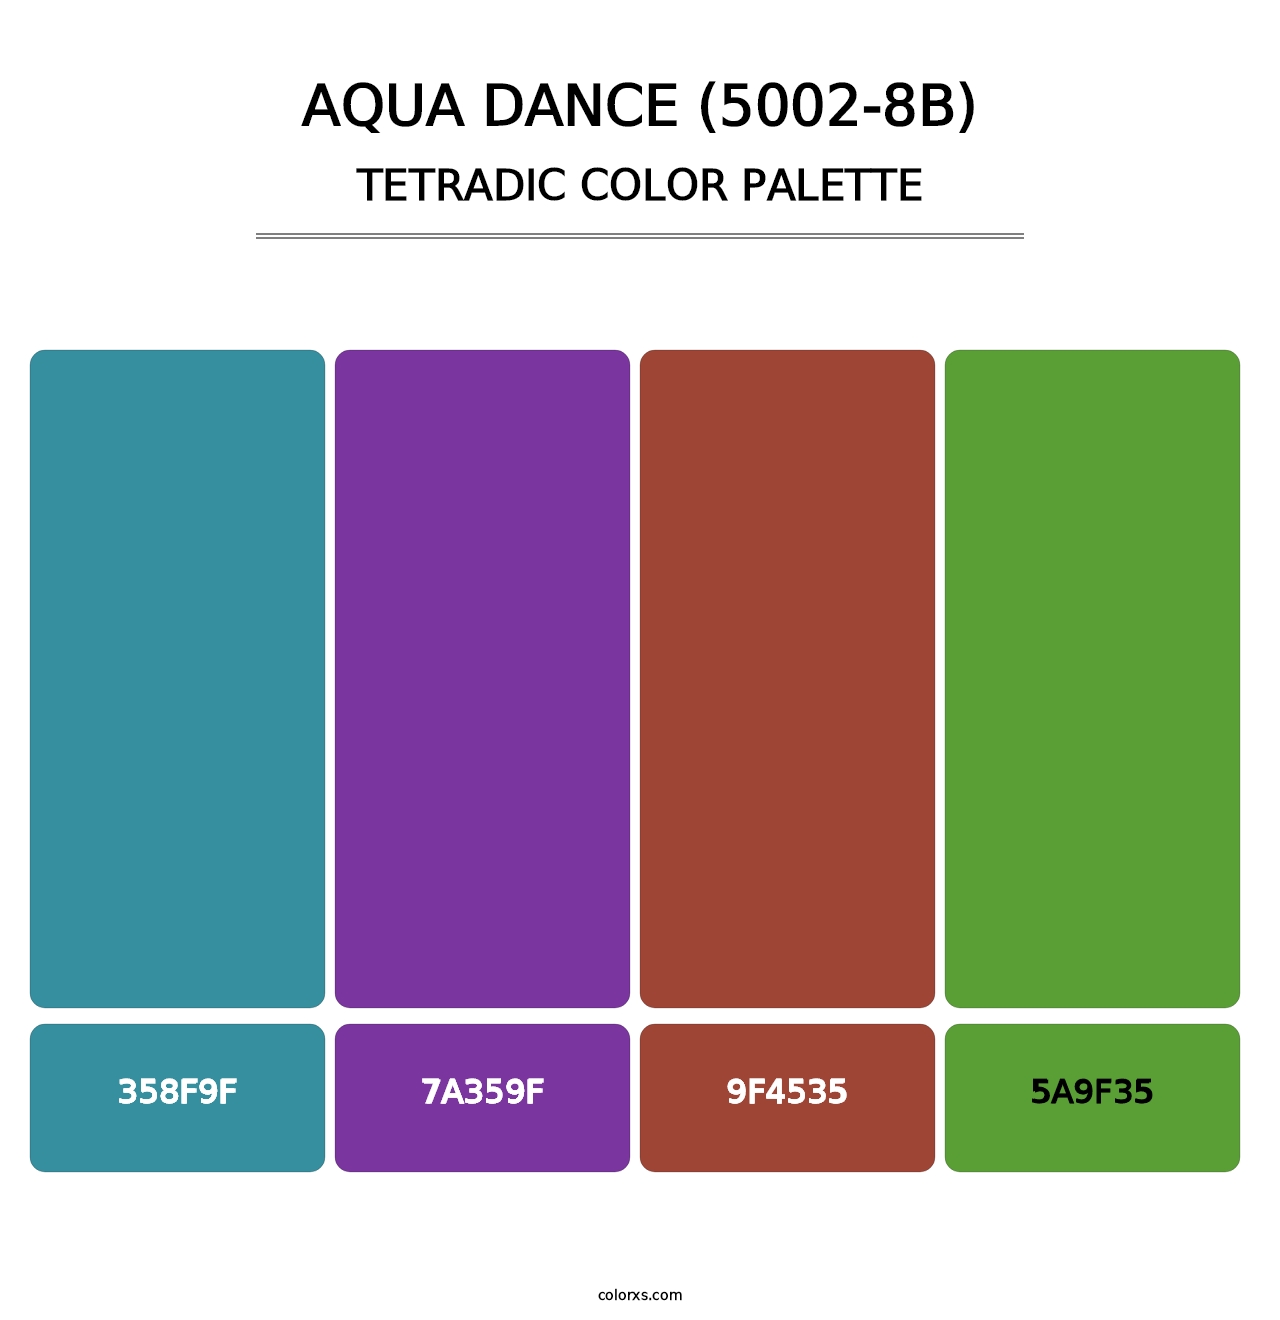 Aqua Dance (5002-8B) - Tetradic Color Palette